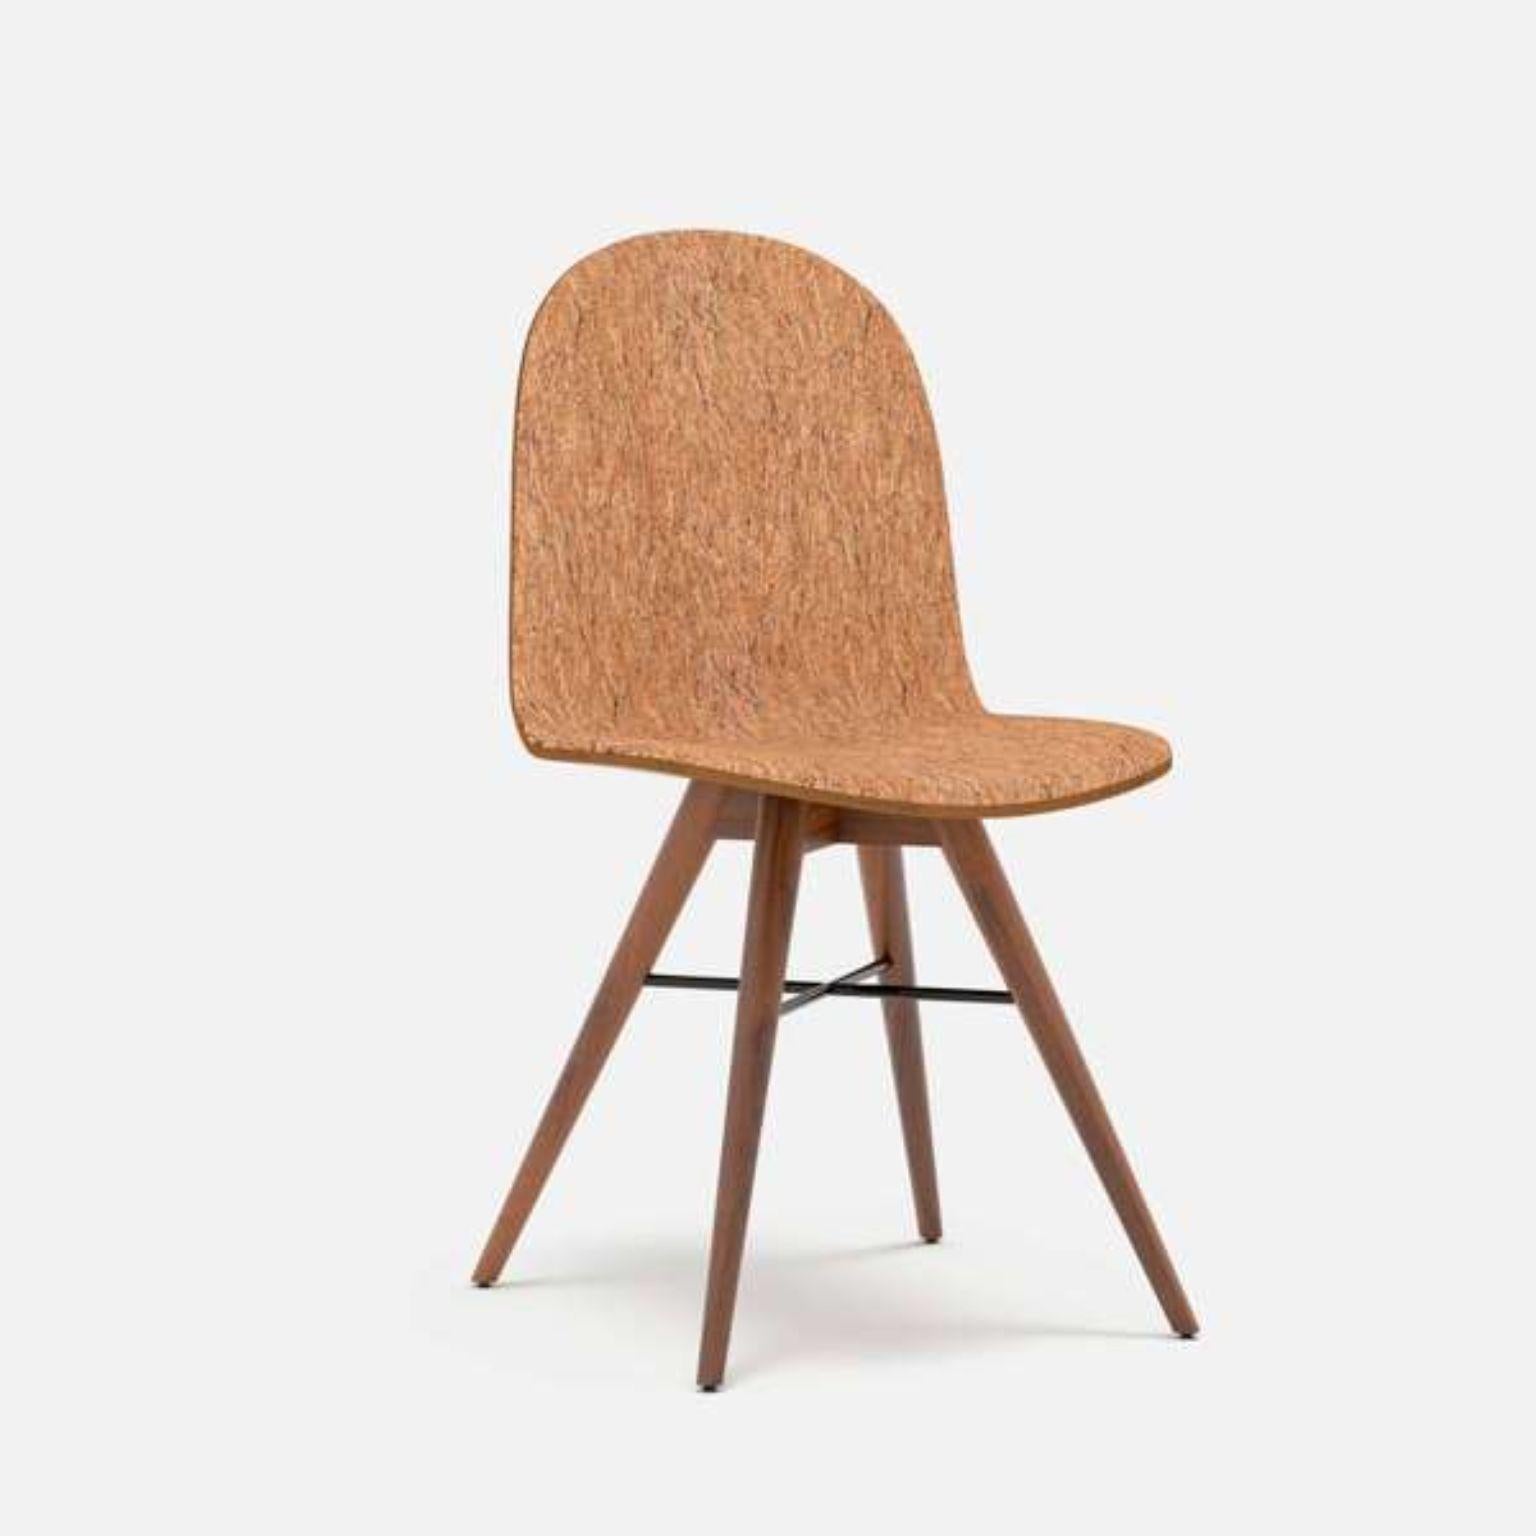 Solid American Walnut Contemporary Chair by Alexandre Caldas 2